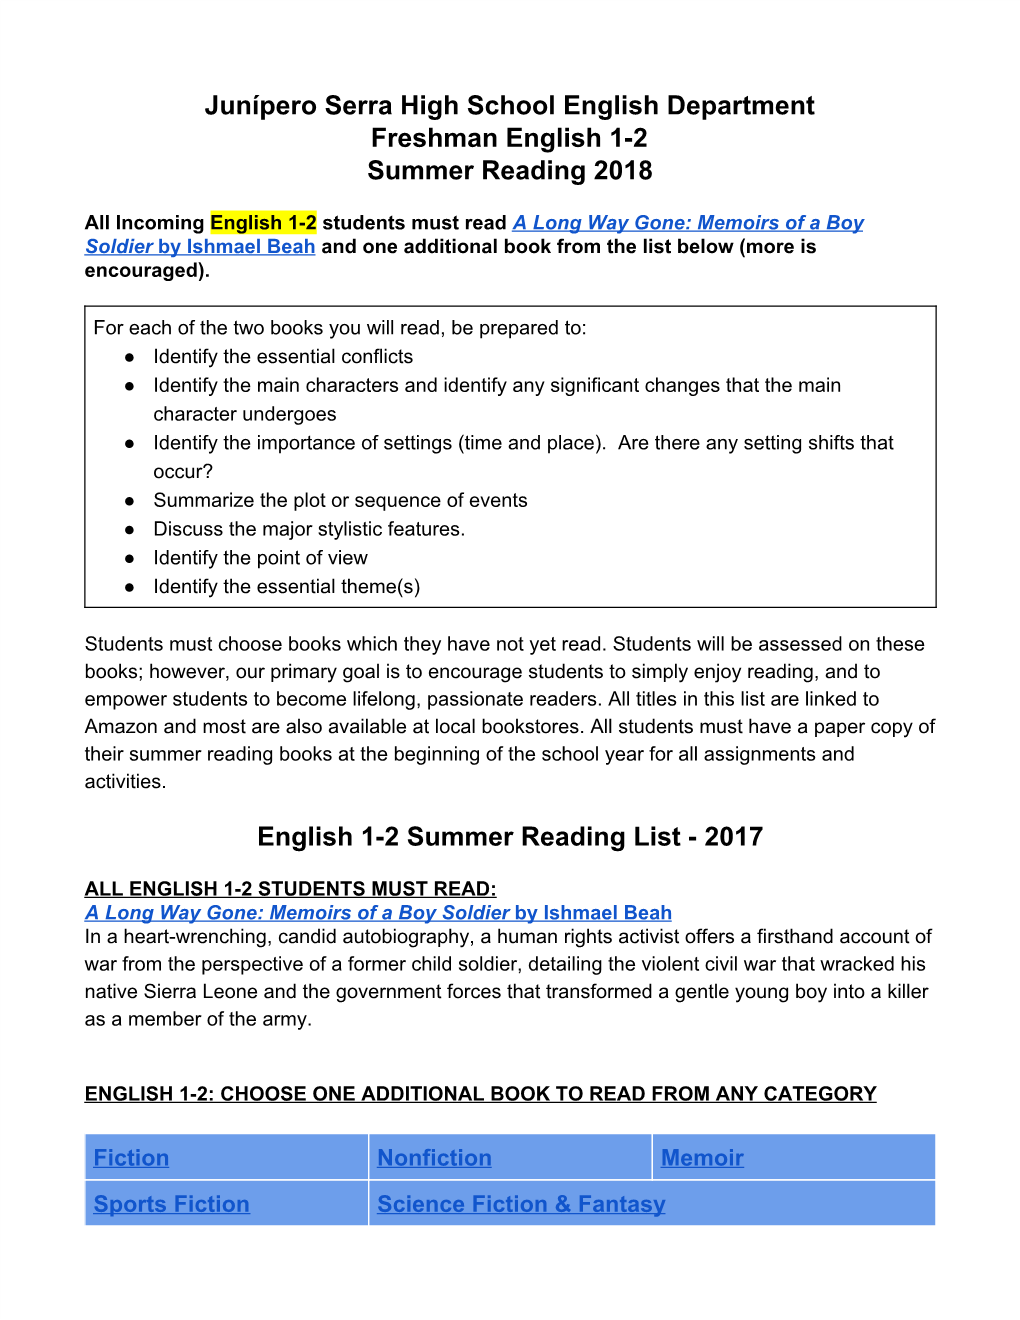 Junípero Serra High School English Department Freshman English 1-2 Summer Reading 2018